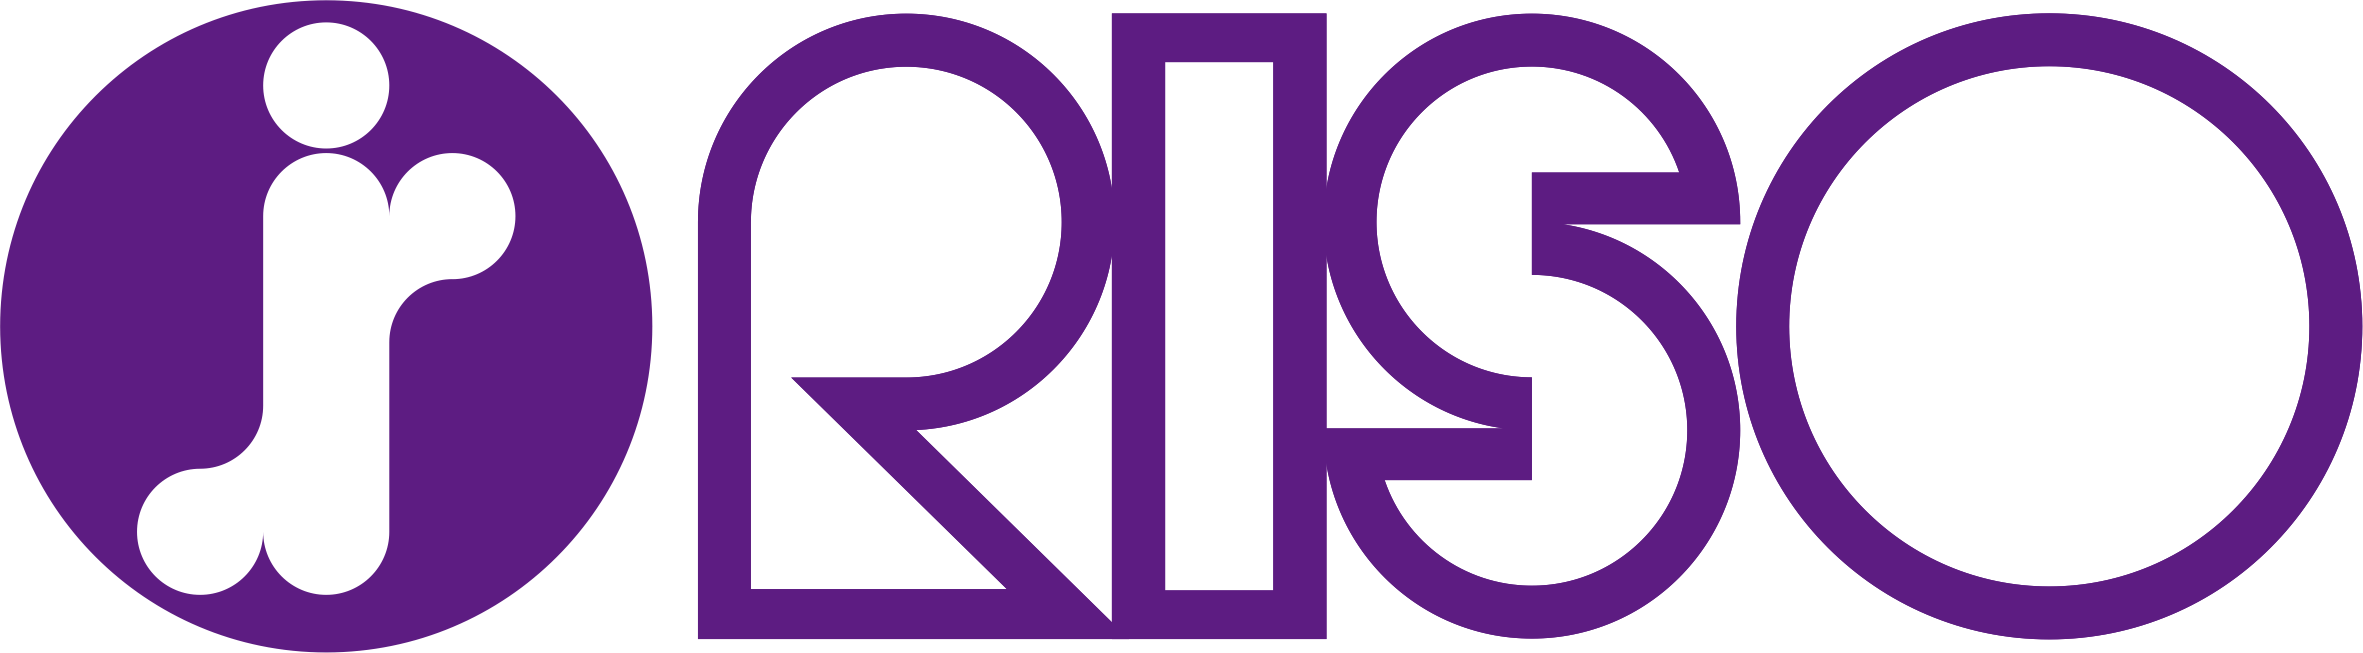 Riso Logo - Riso India Pvt. Ltd. Digital Duplicator and Inkjet Printers